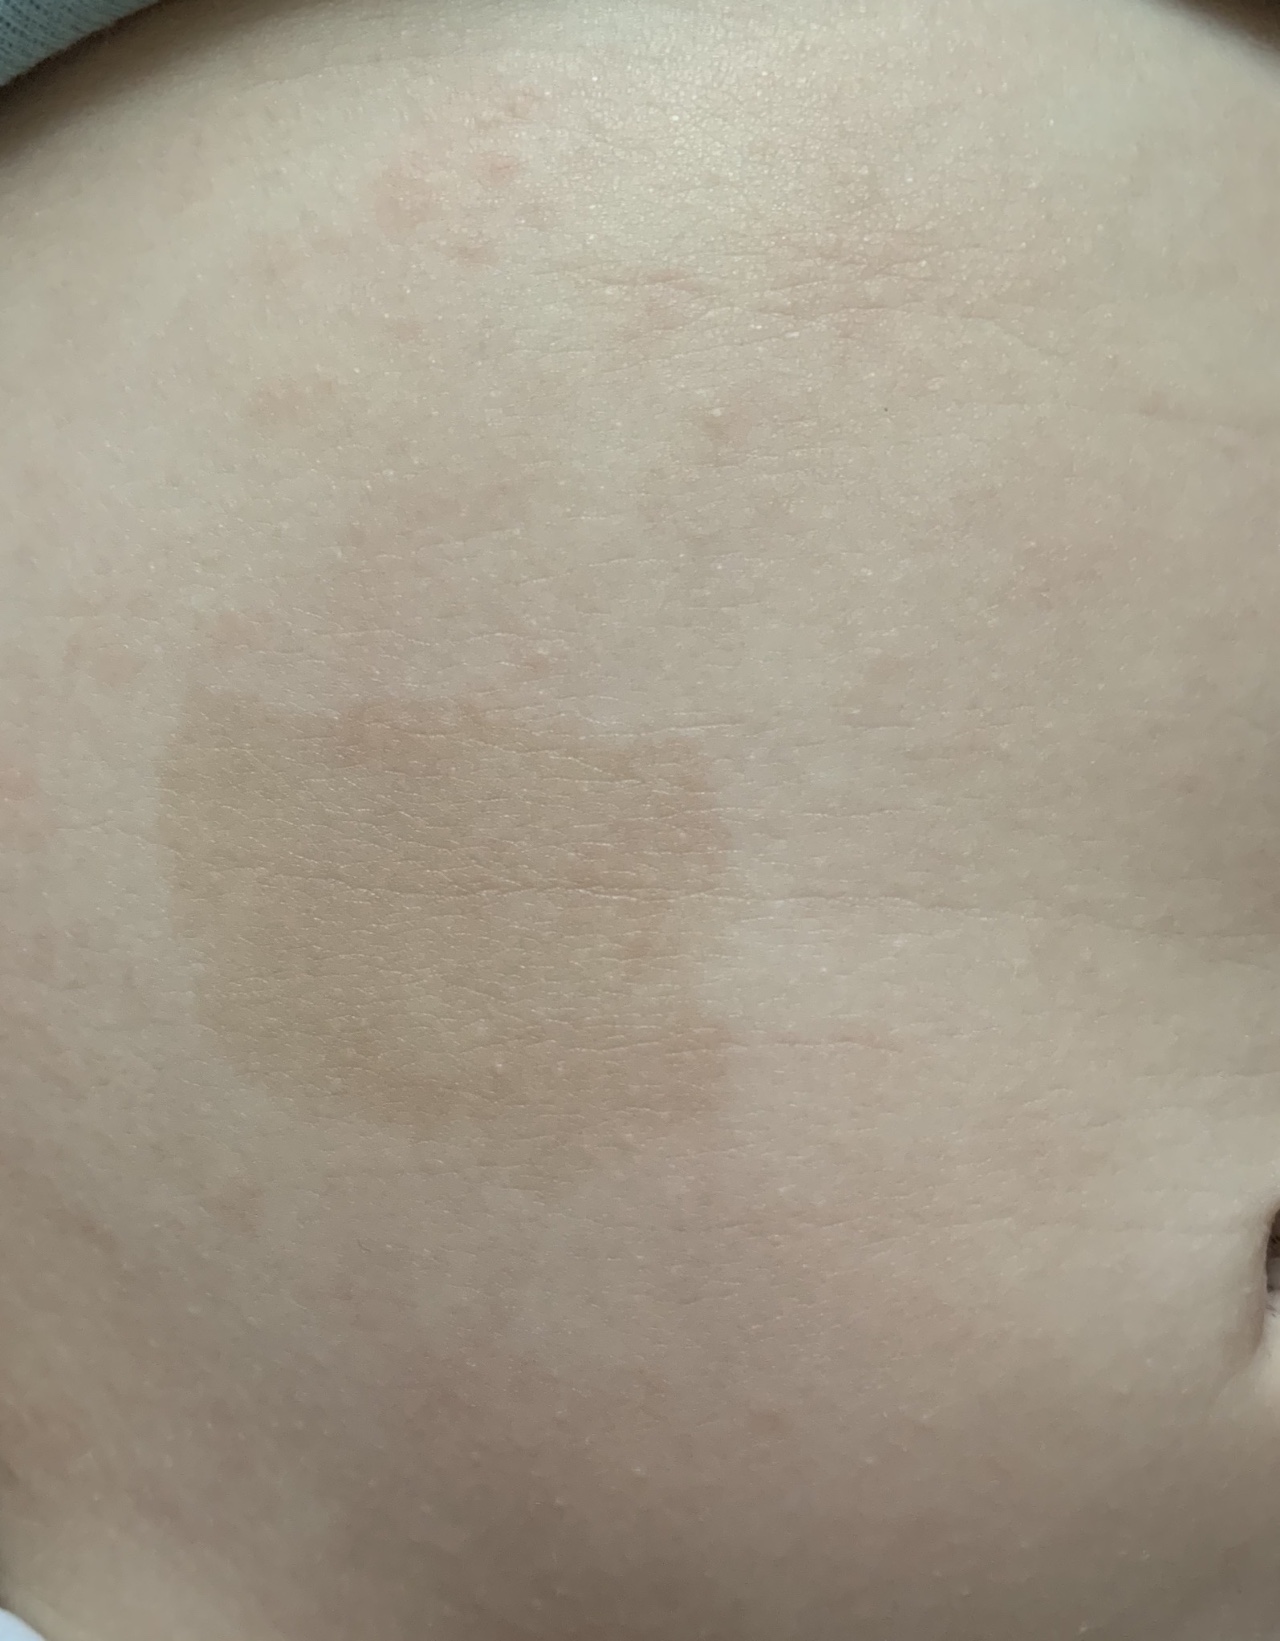 светло коричневые пятна на груди у женщин фото 87